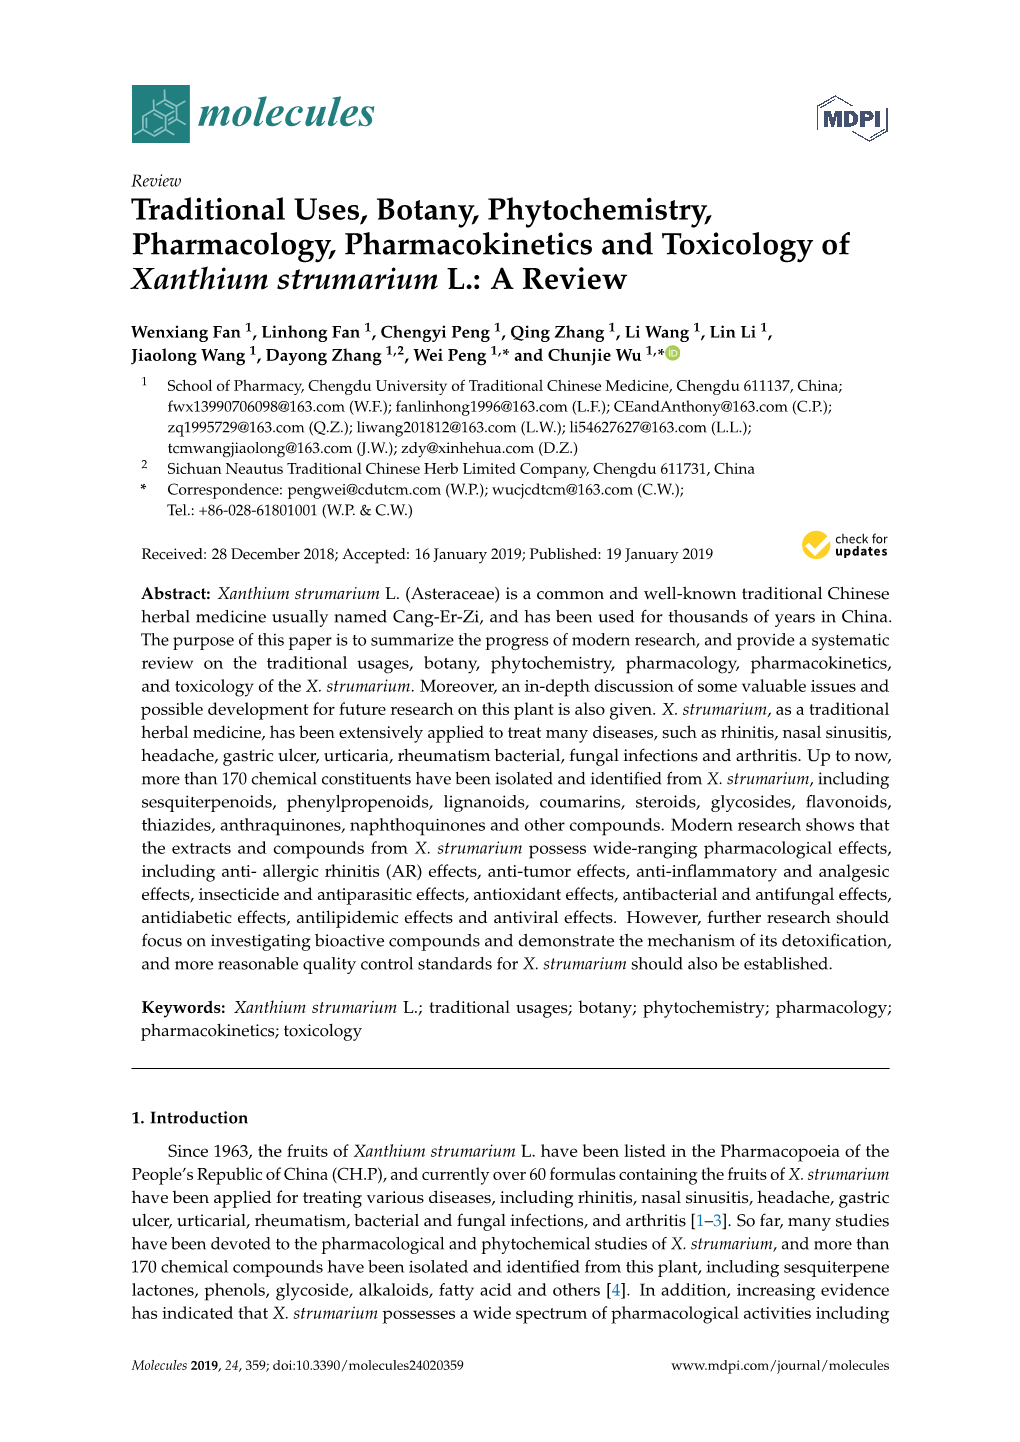 Traditional Uses, Botany, Phytochemistry, Pharmacology, Pharmacokinetics and Toxicology of Xanthium Strumarium L.: a Review